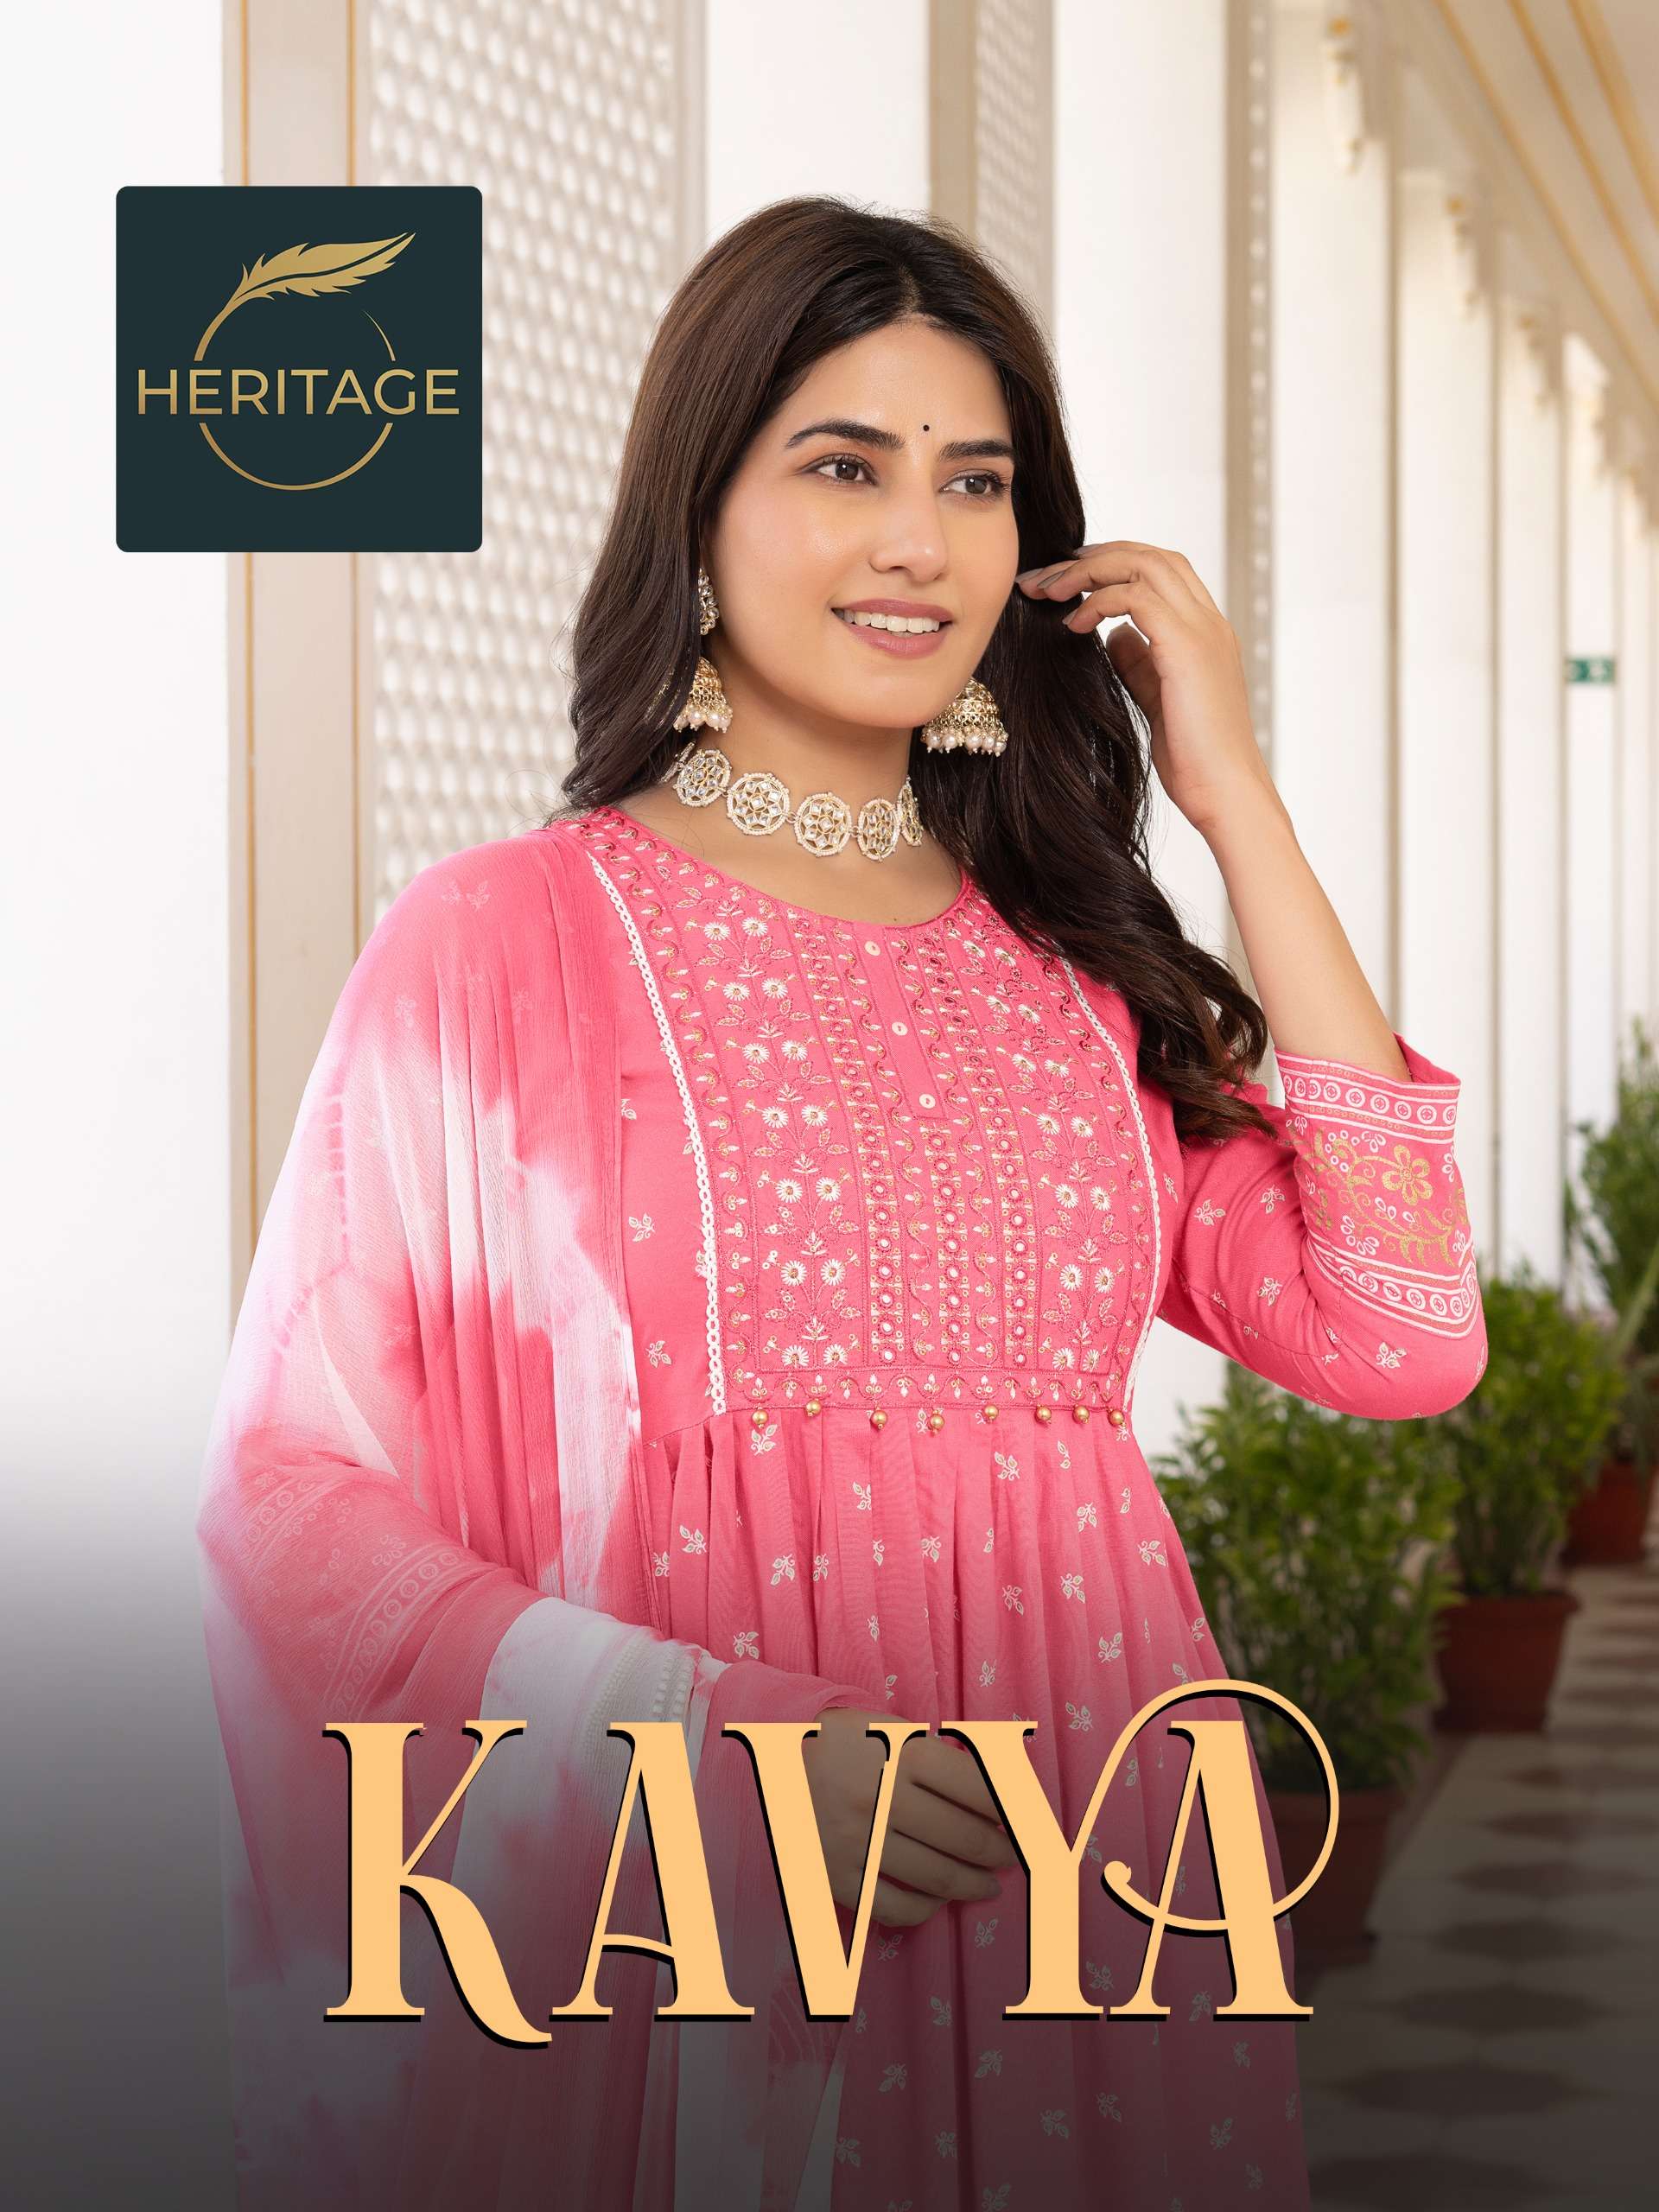 heritage kavya designer printed kurti with palazzo catalogue online supplier surat gujarat 